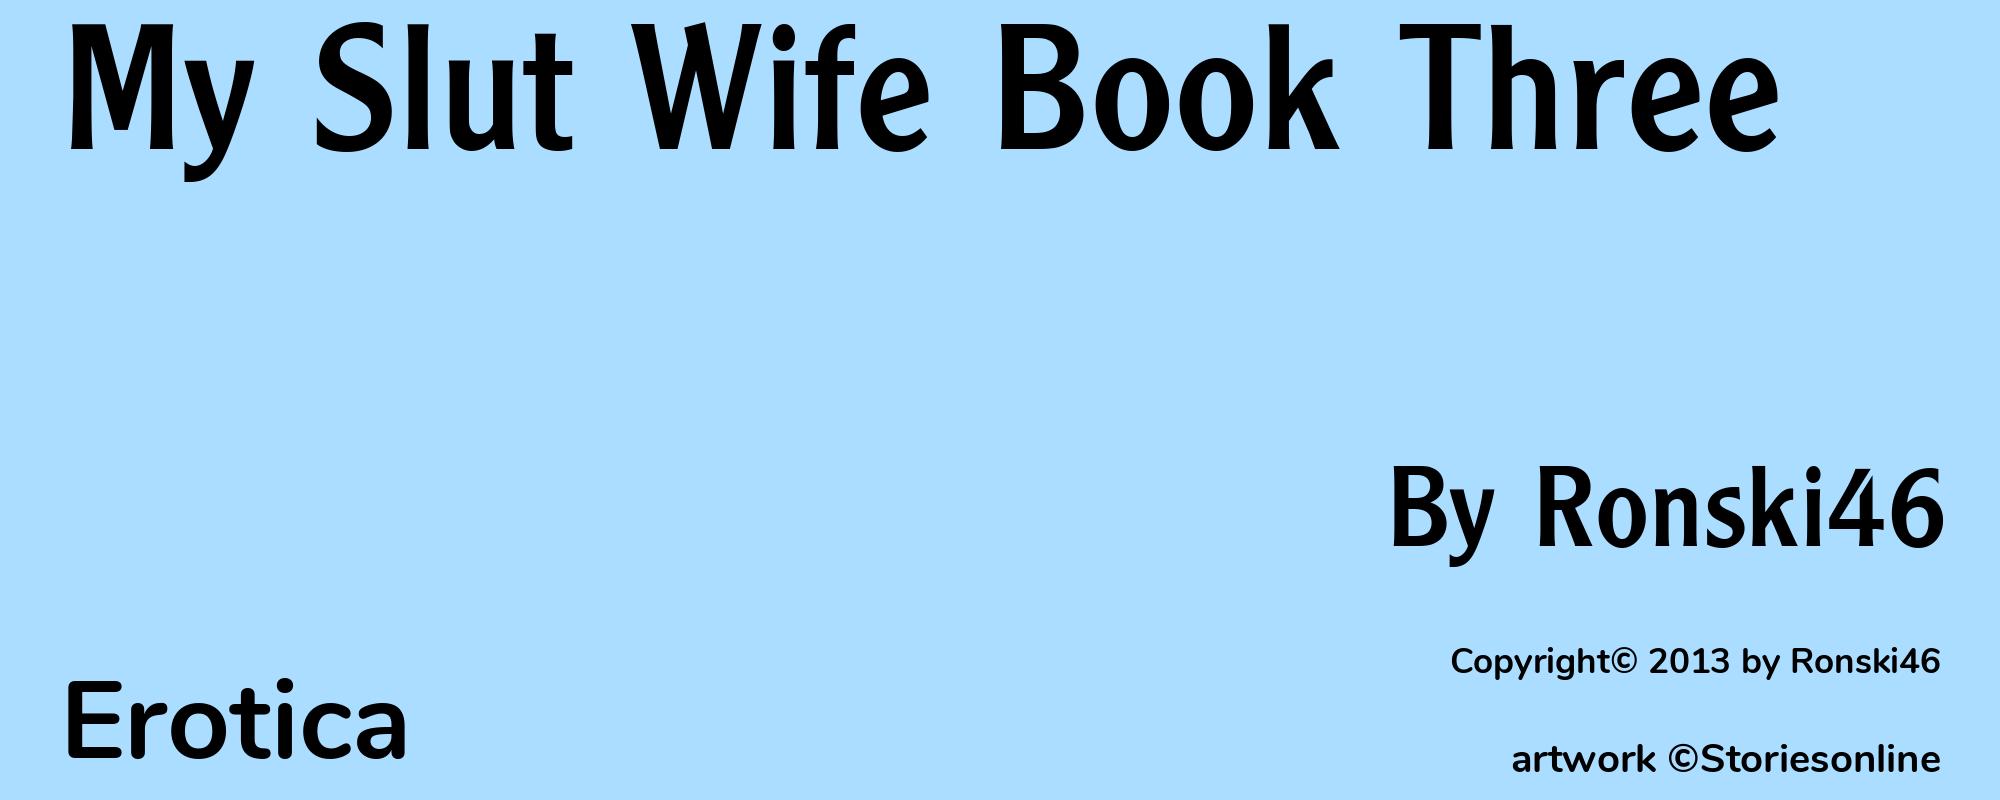 My Slut Wife Book Three - Cover